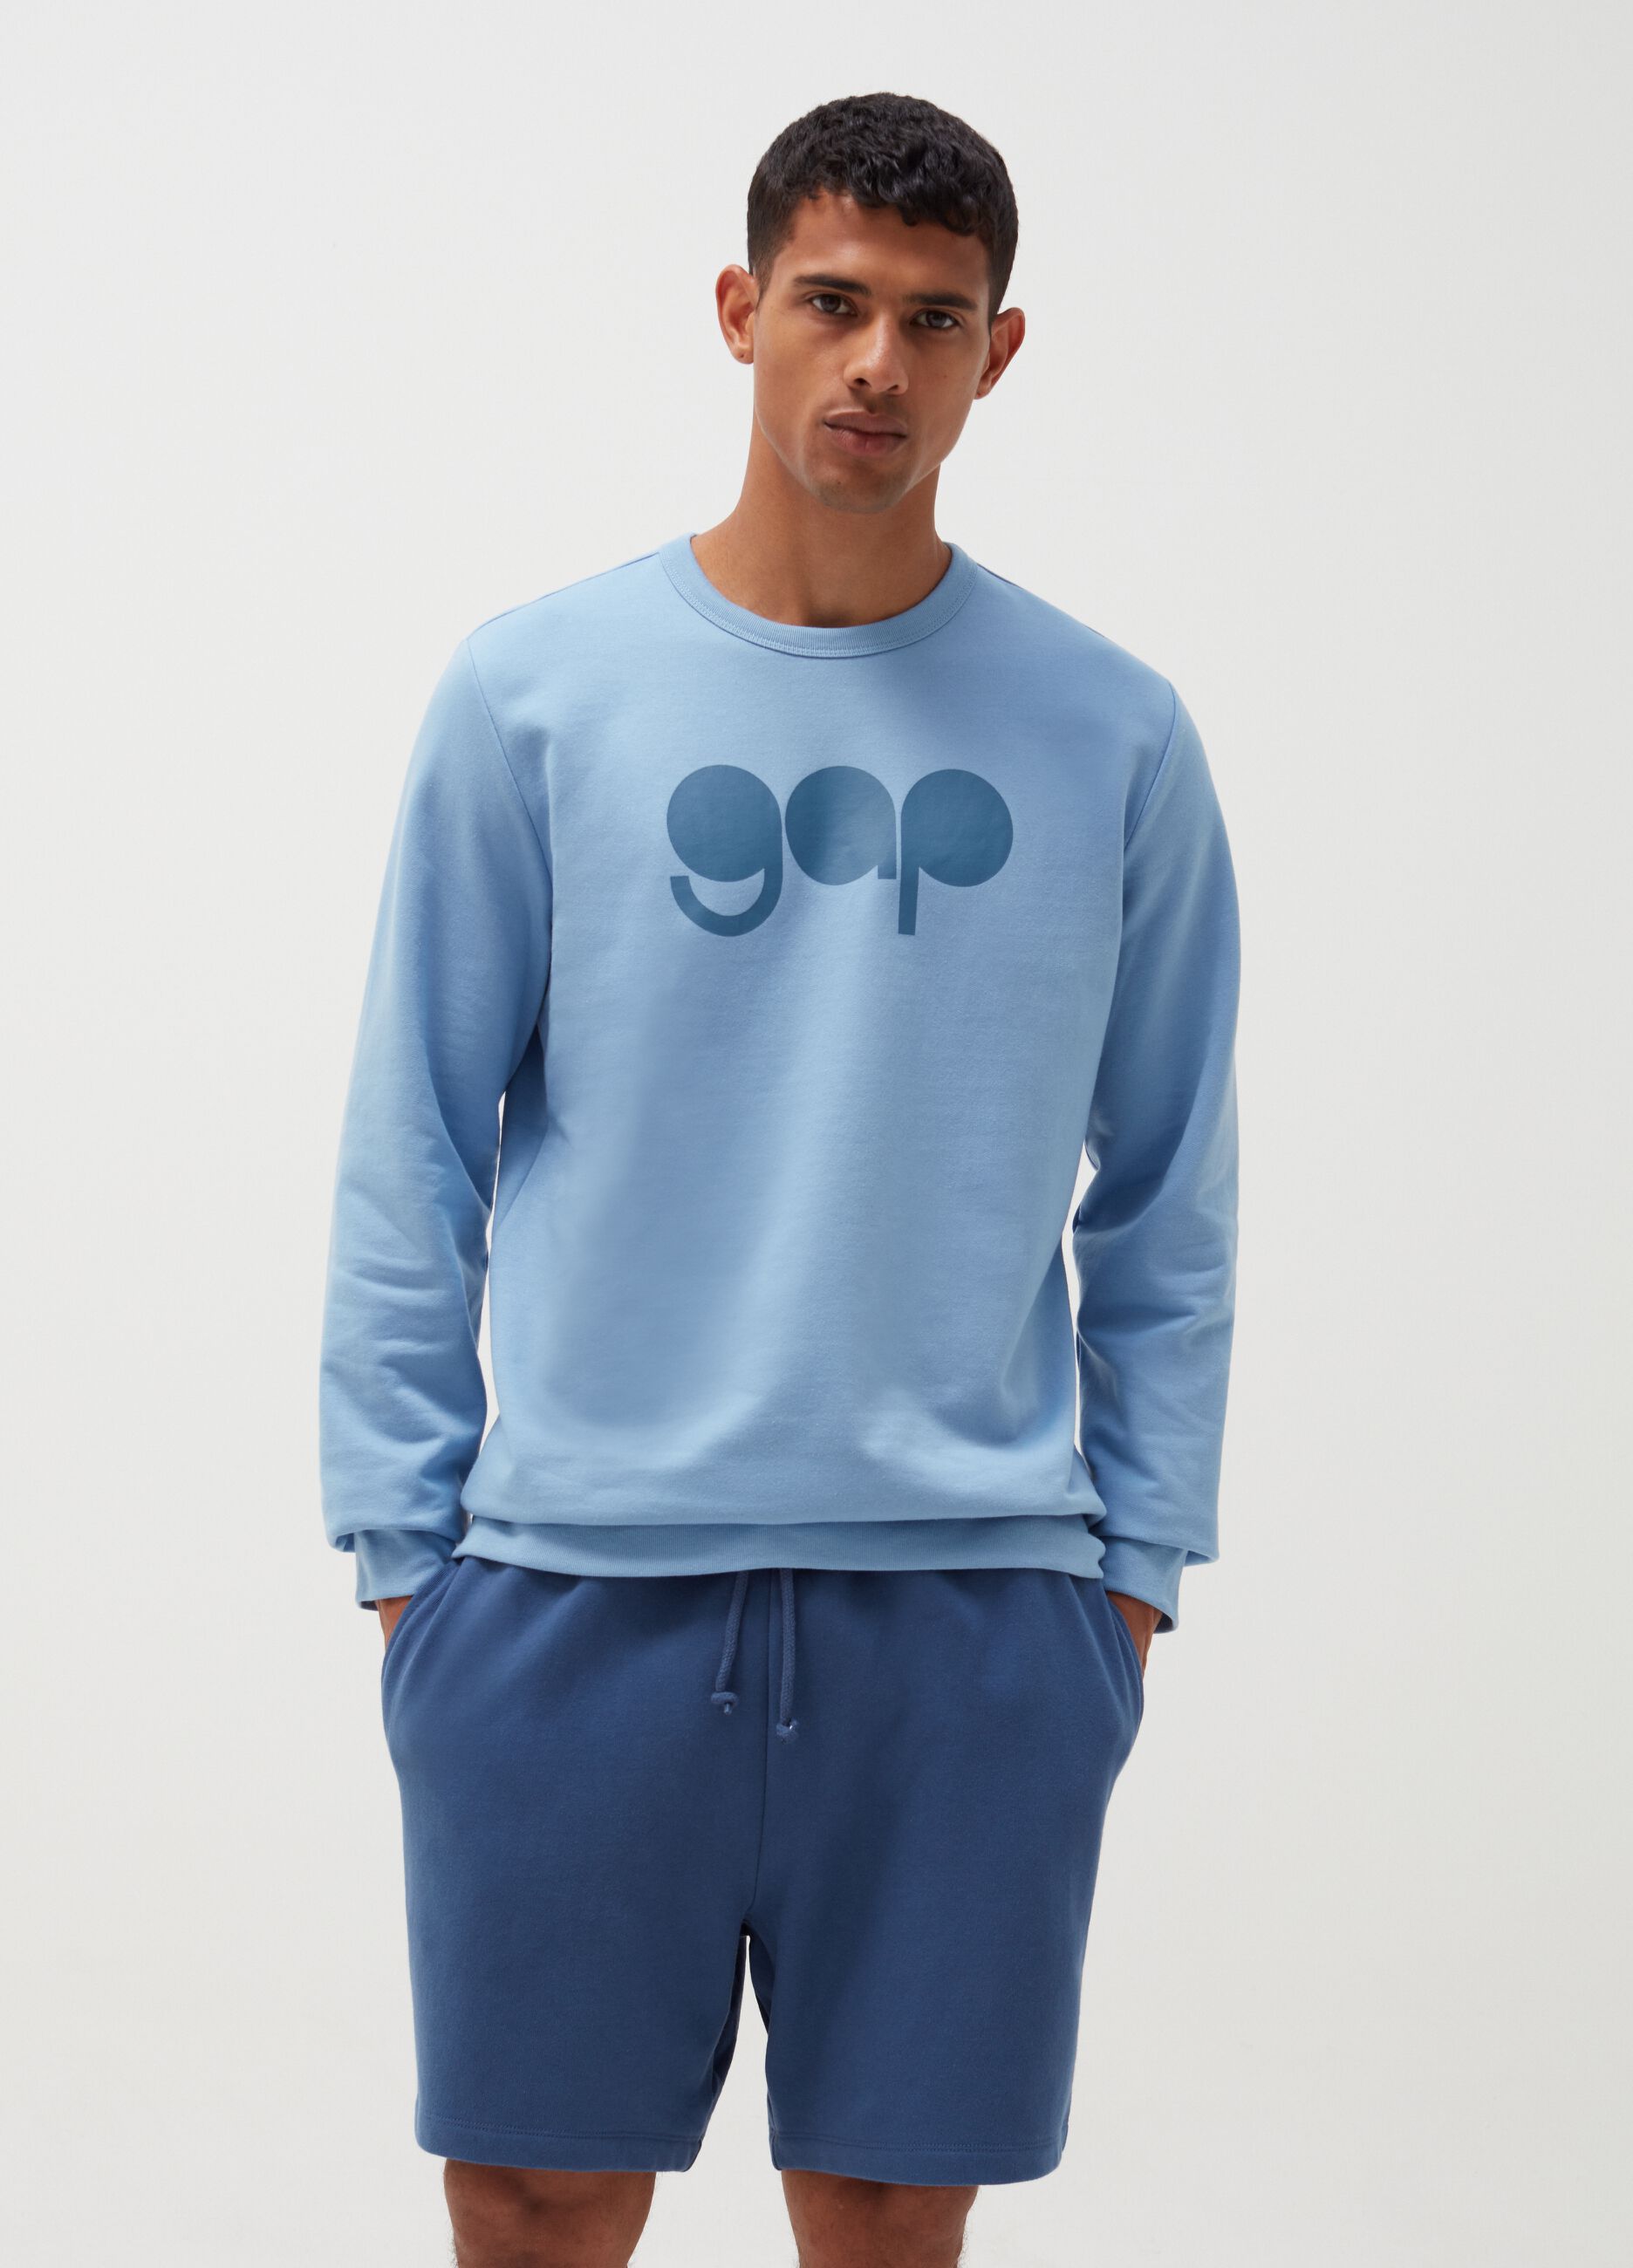 Cotton sweatshirt with round neck and logo